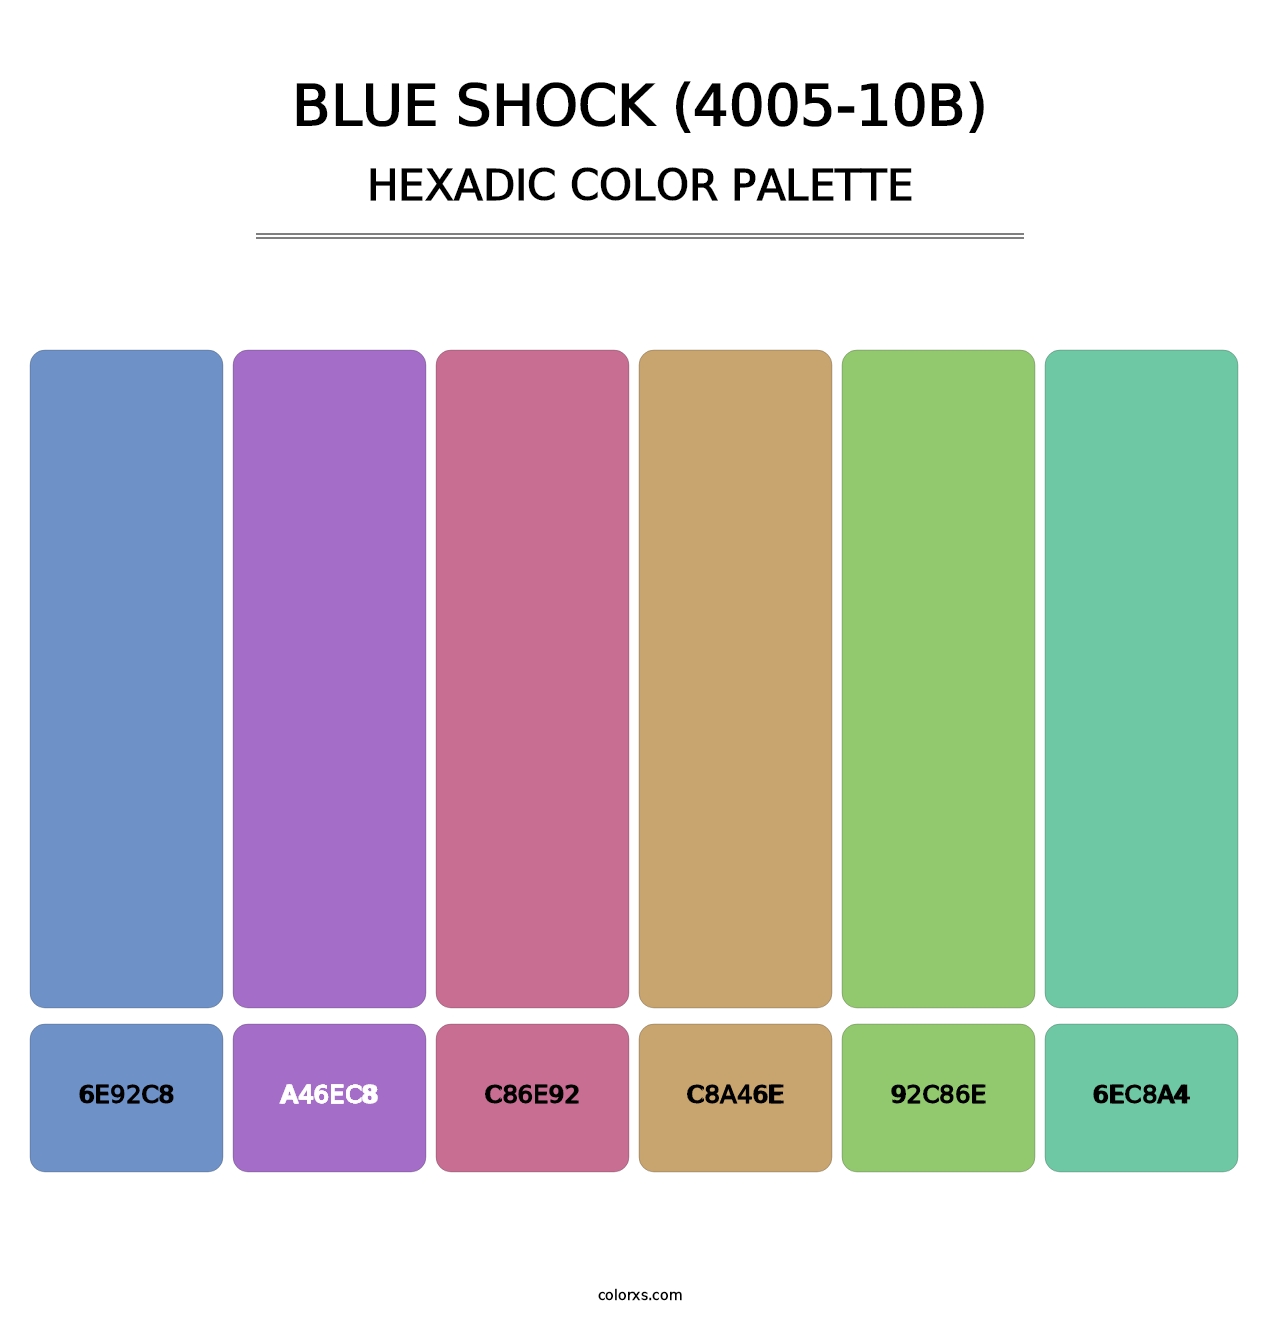 Blue Shock (4005-10B) - Hexadic Color Palette